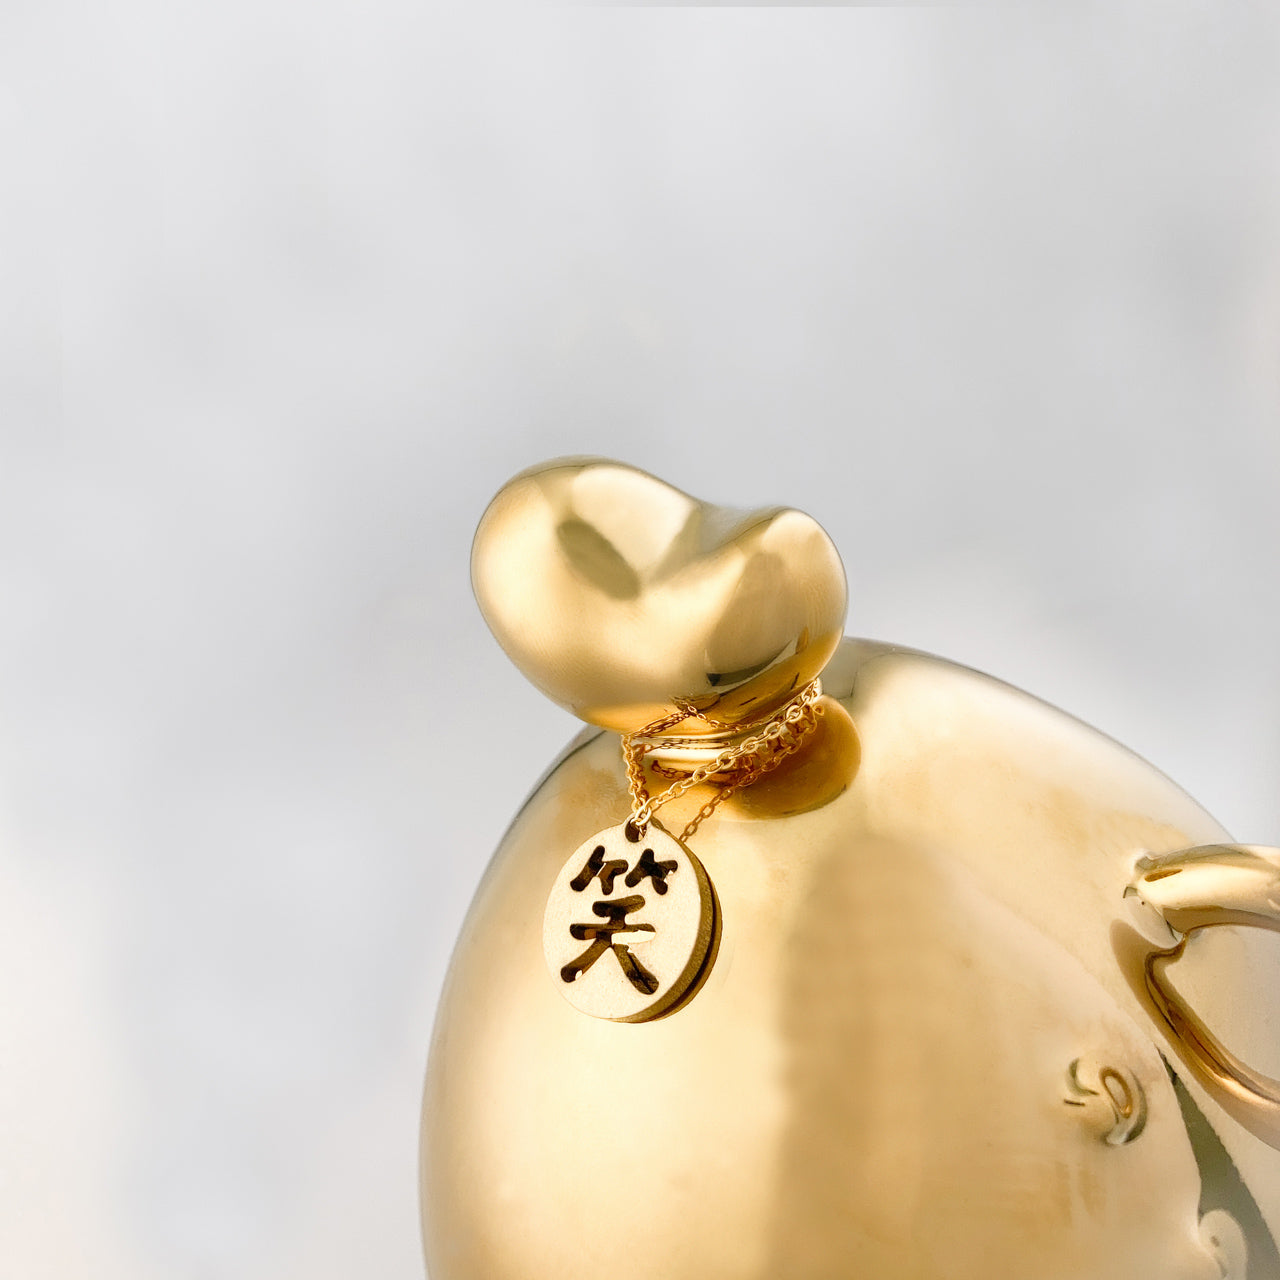 luxury gold happy bean 招笑豆 artist tts the tiny smile art Gift Shop Hong Kong Souvenirs lucky cat ceramic home decor 香港藝術禮品店 創意禮物 陶瓷擺設 招財 快樂 笑臉 搬家 生日送禮